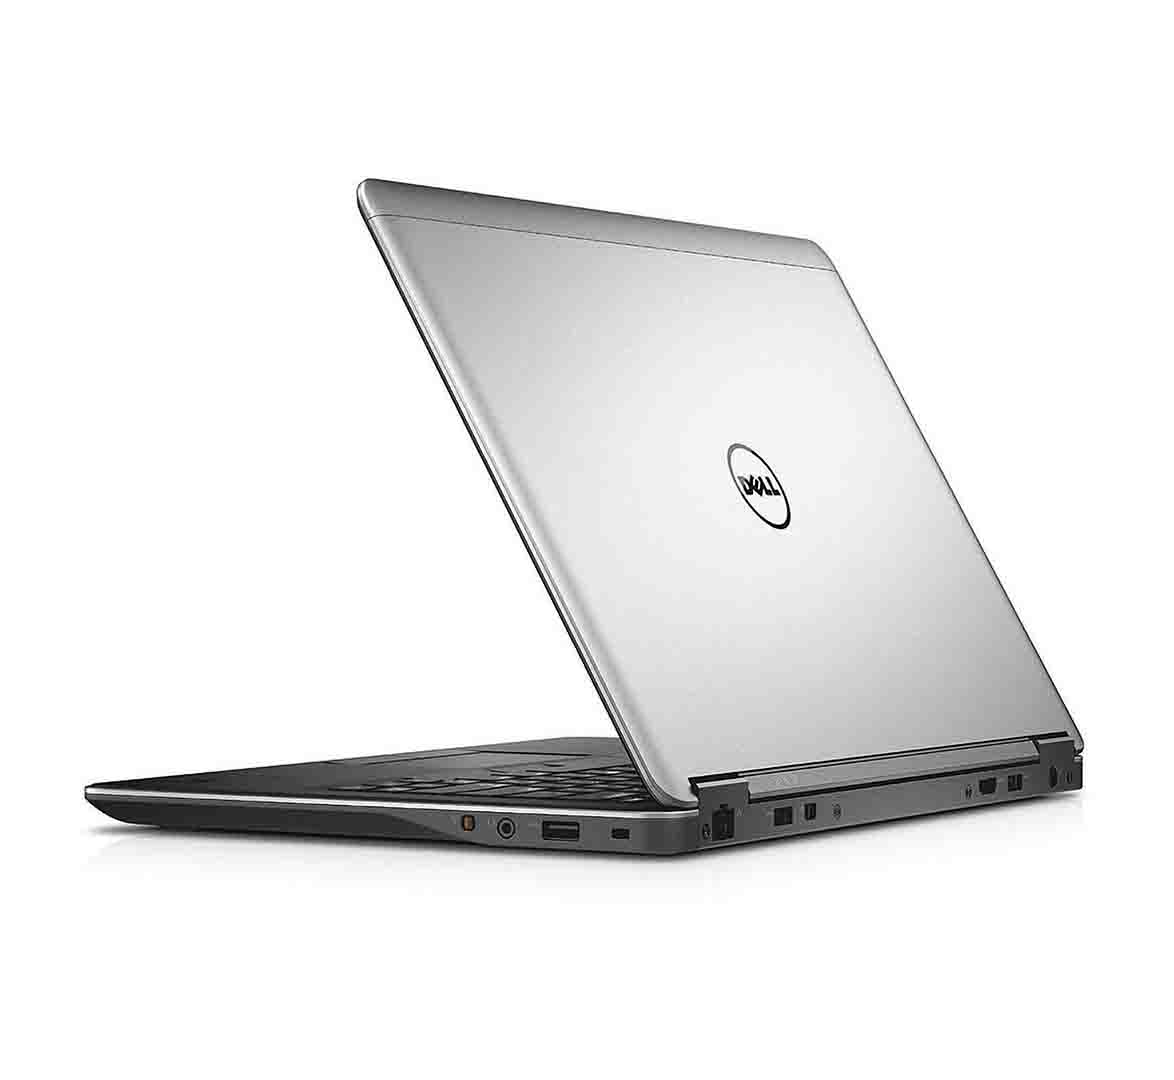 Dell Latitude E7440 Business Laptop, Intel Core i5-4th Gen CPU, 8GB RAM, 256GB SSD, 14 inch Touchscreen, Windows 10 Pro, Refurbished Laptop